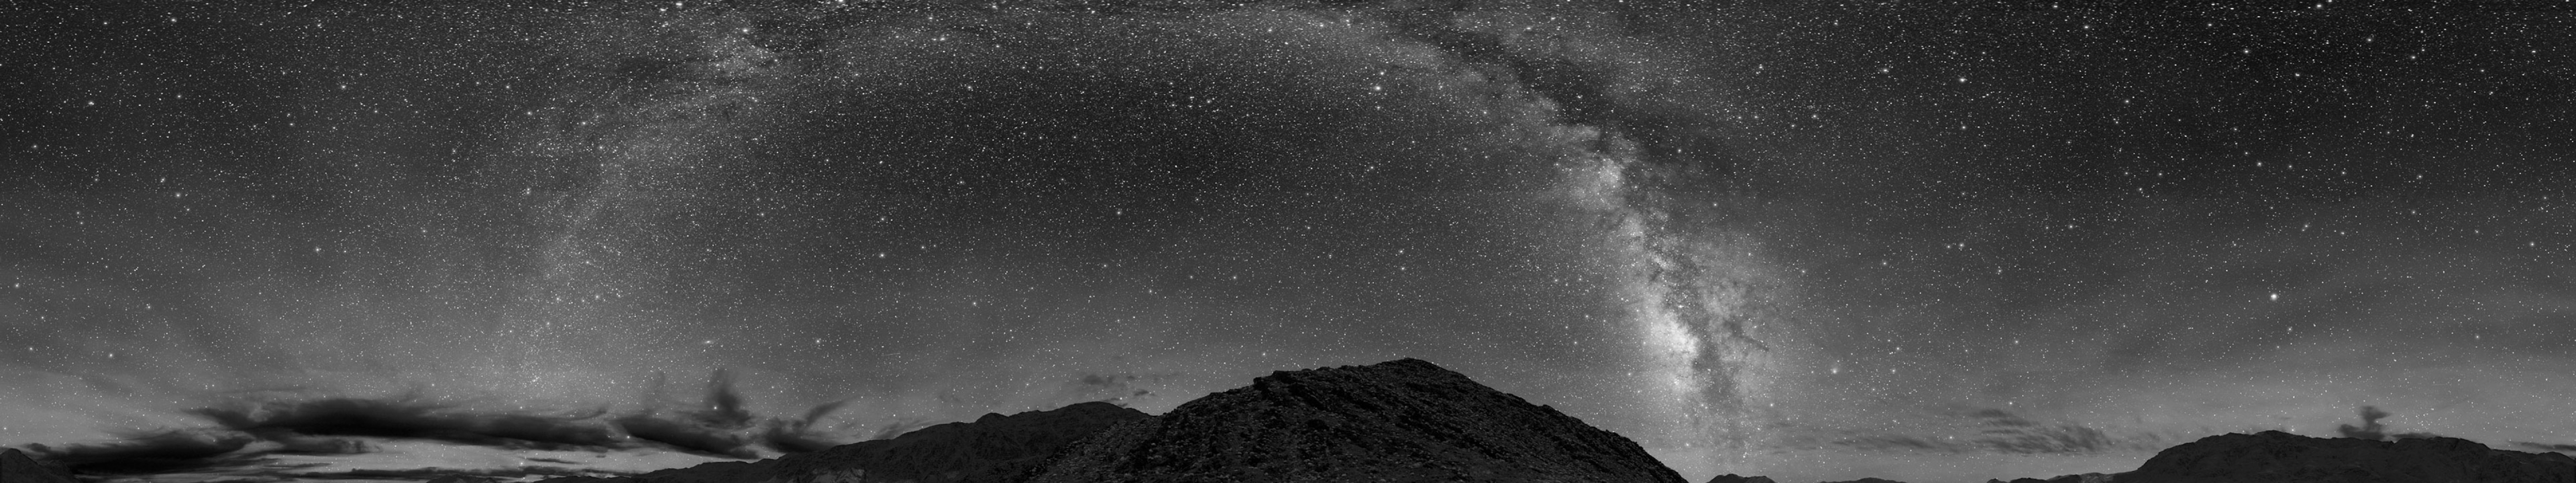 Death Valley Milky Way Wallpaper Teahub Io